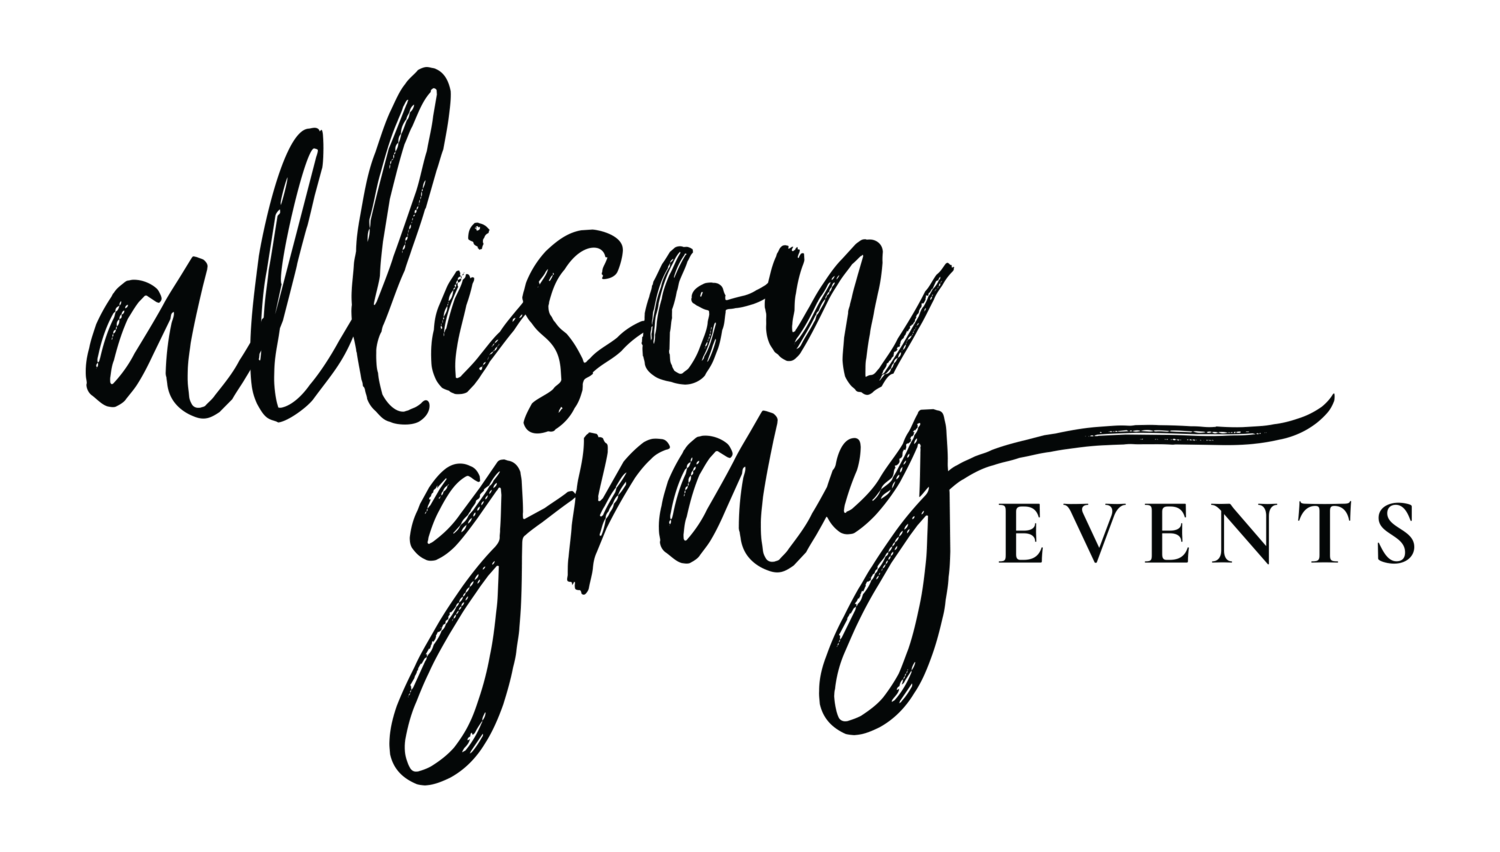 Allison Gray Events